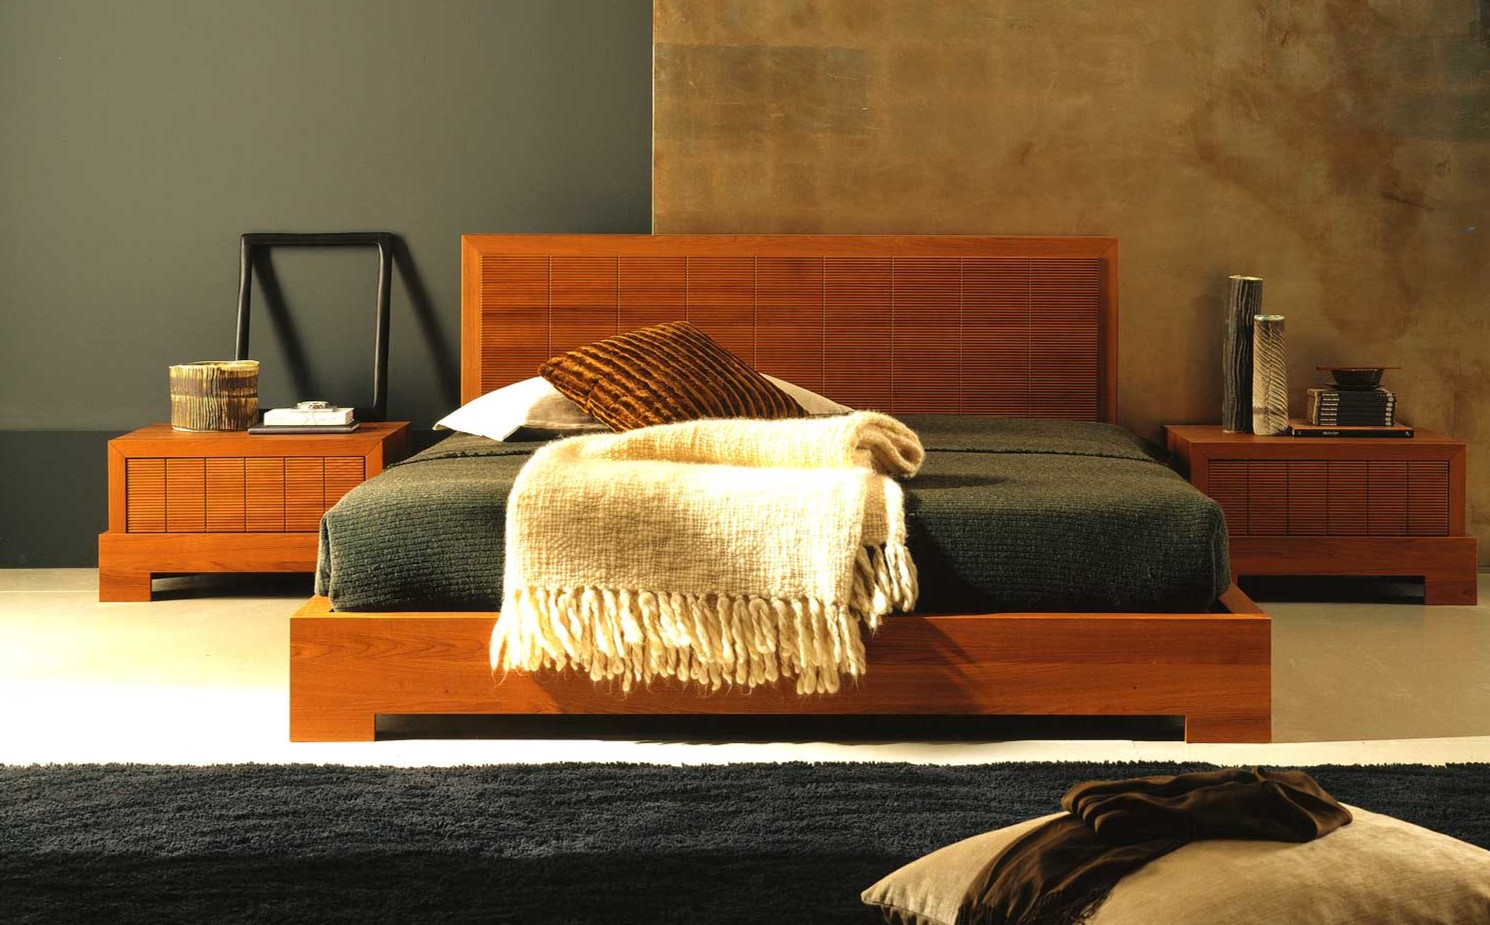 Мягкий плед на кровати создаст уютную атмосферу в спальне